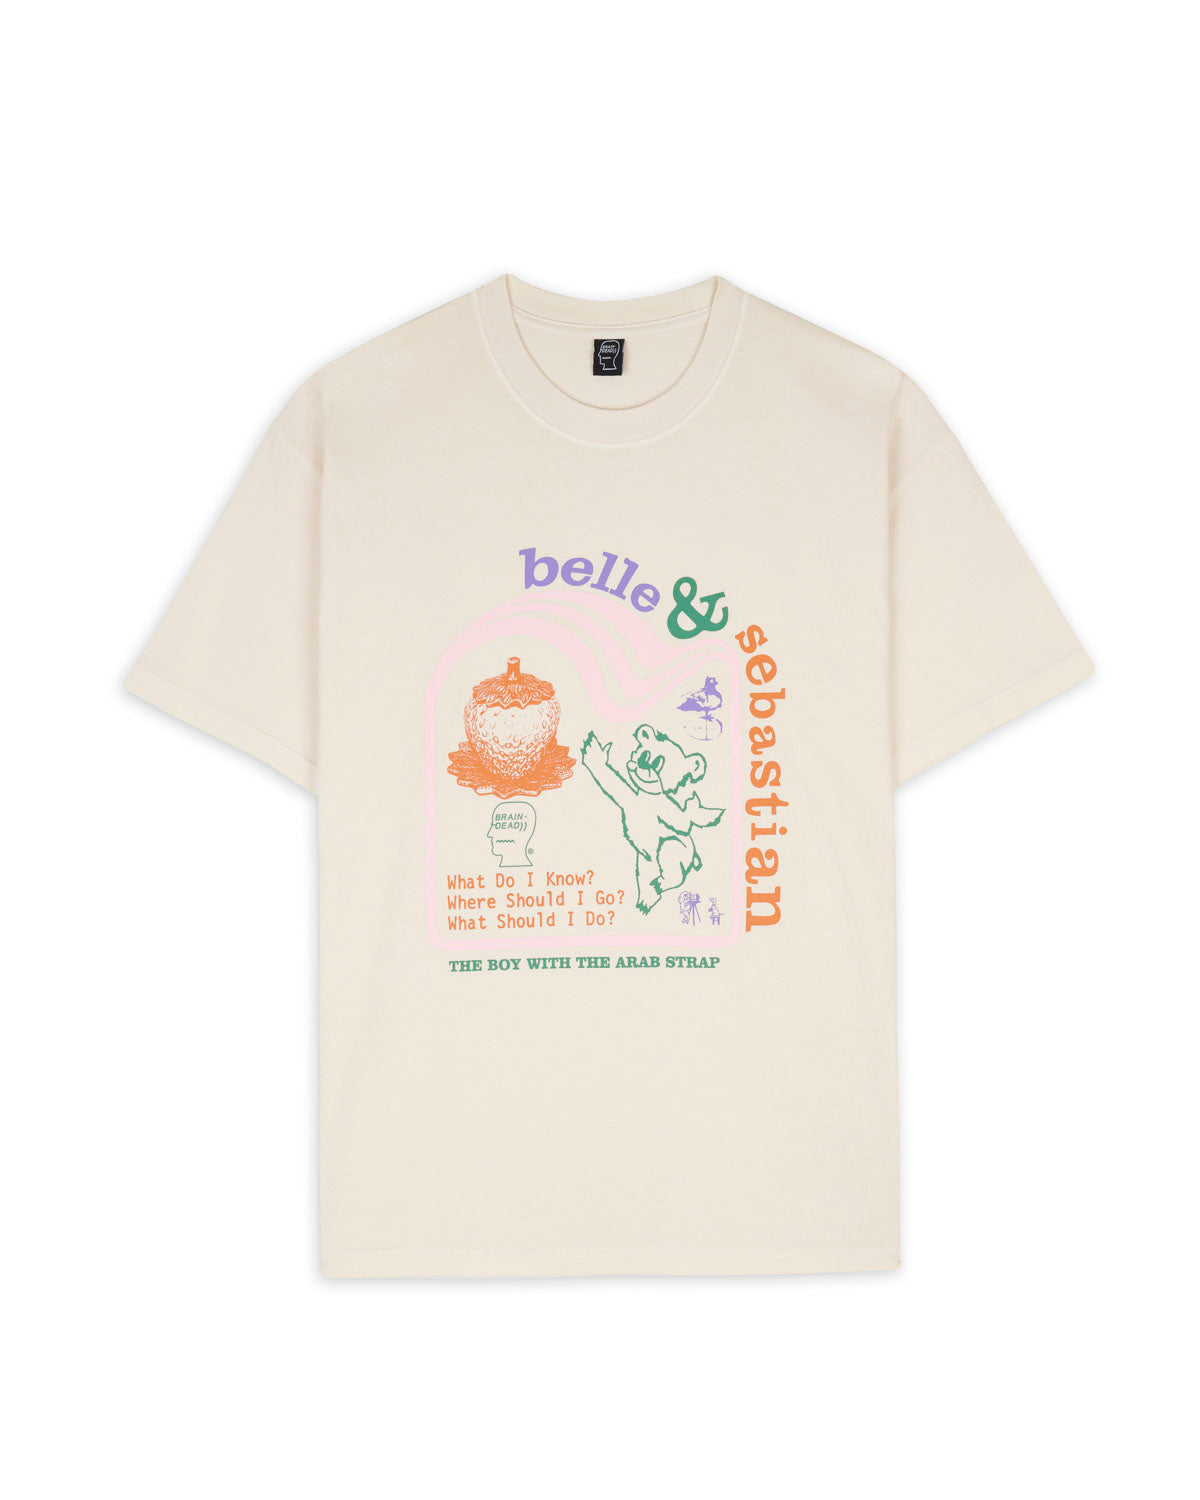 Brain Dead x Belle & Sebastian Boy With The Arab Strap T-Shirt - Natur